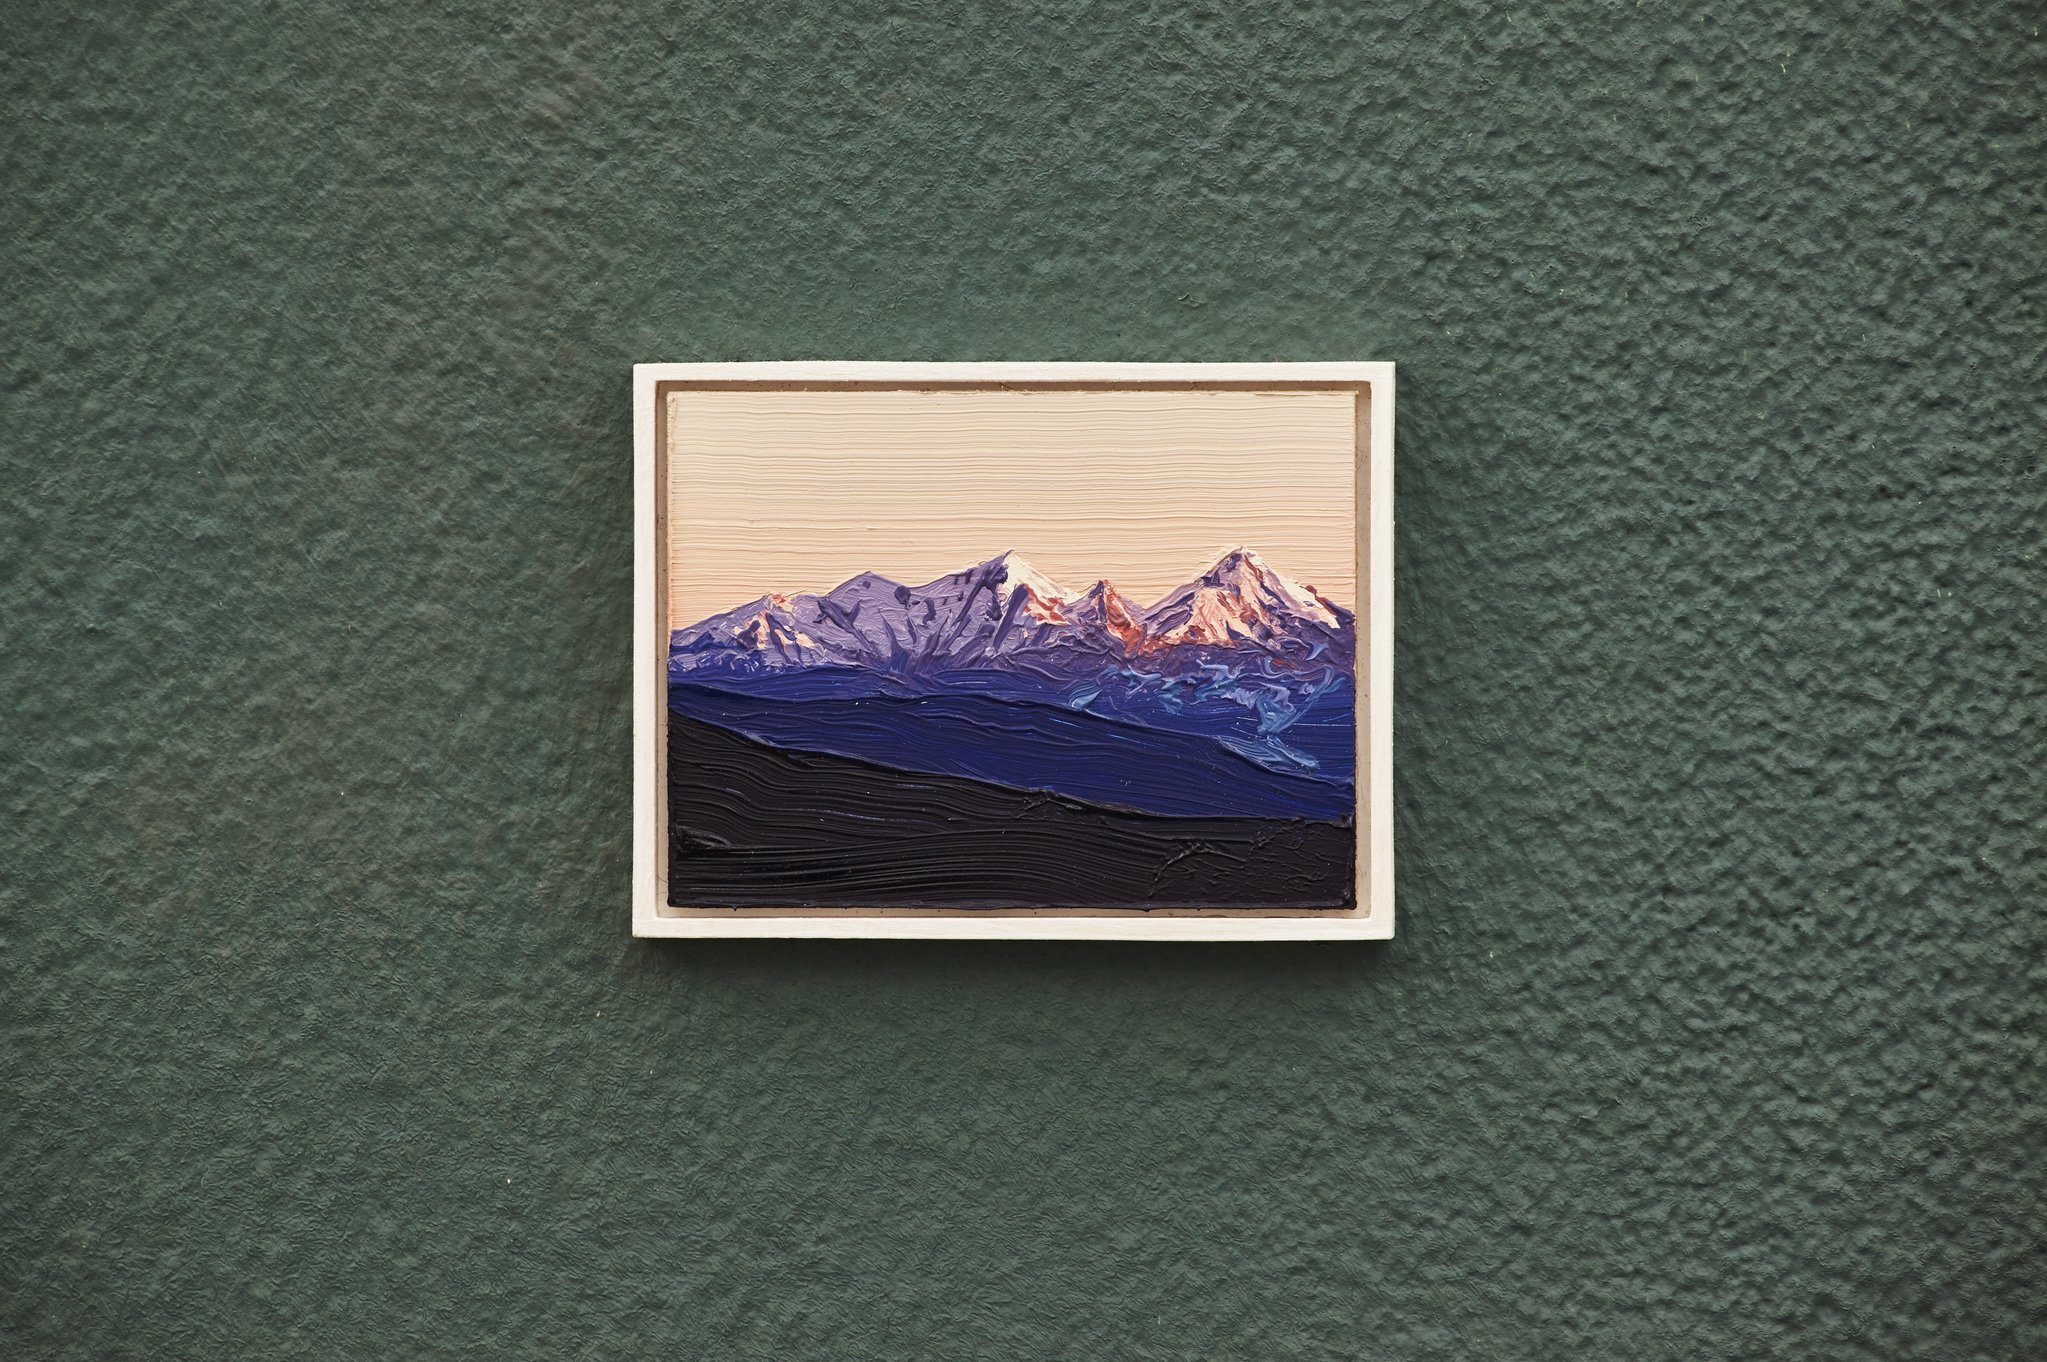 Felix Rehfeld, Installation views from "540 Berge."